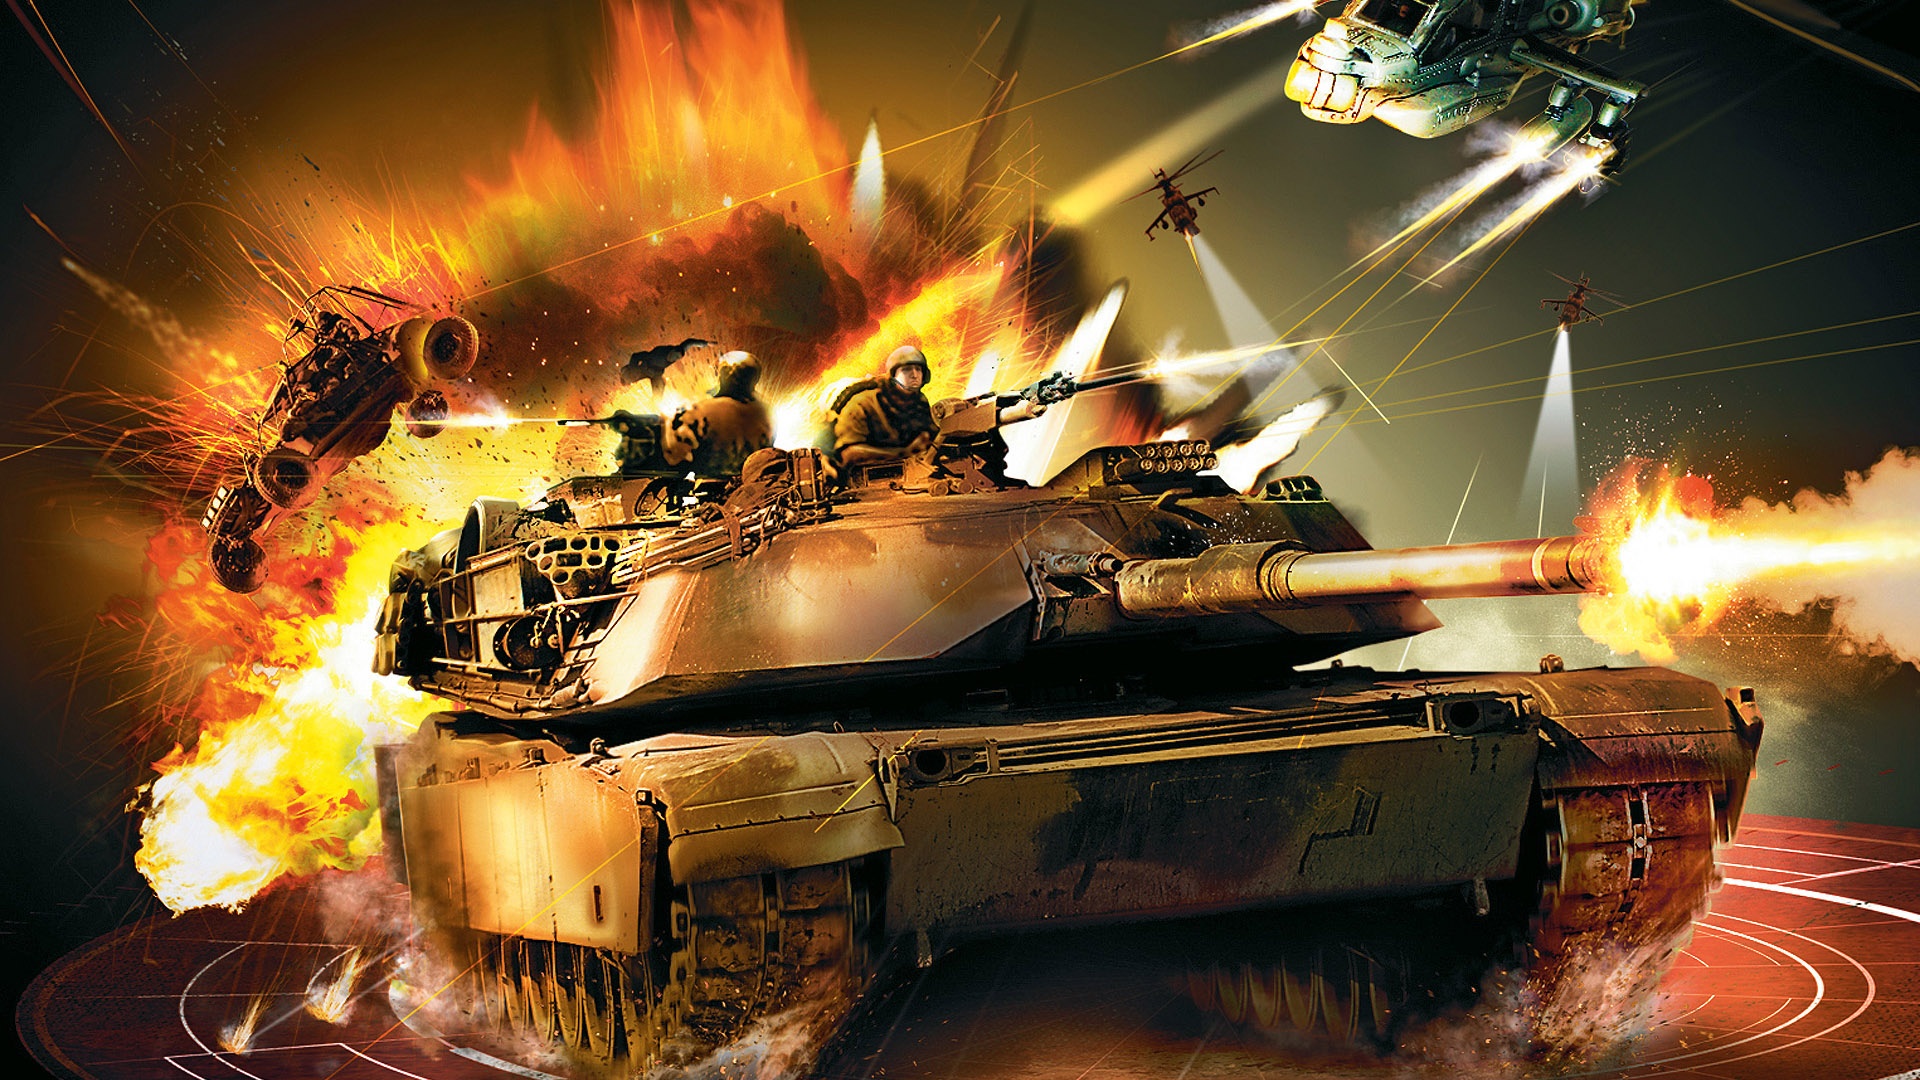 Download Soldier Tanks War Wallpaper | Wallpapers.com